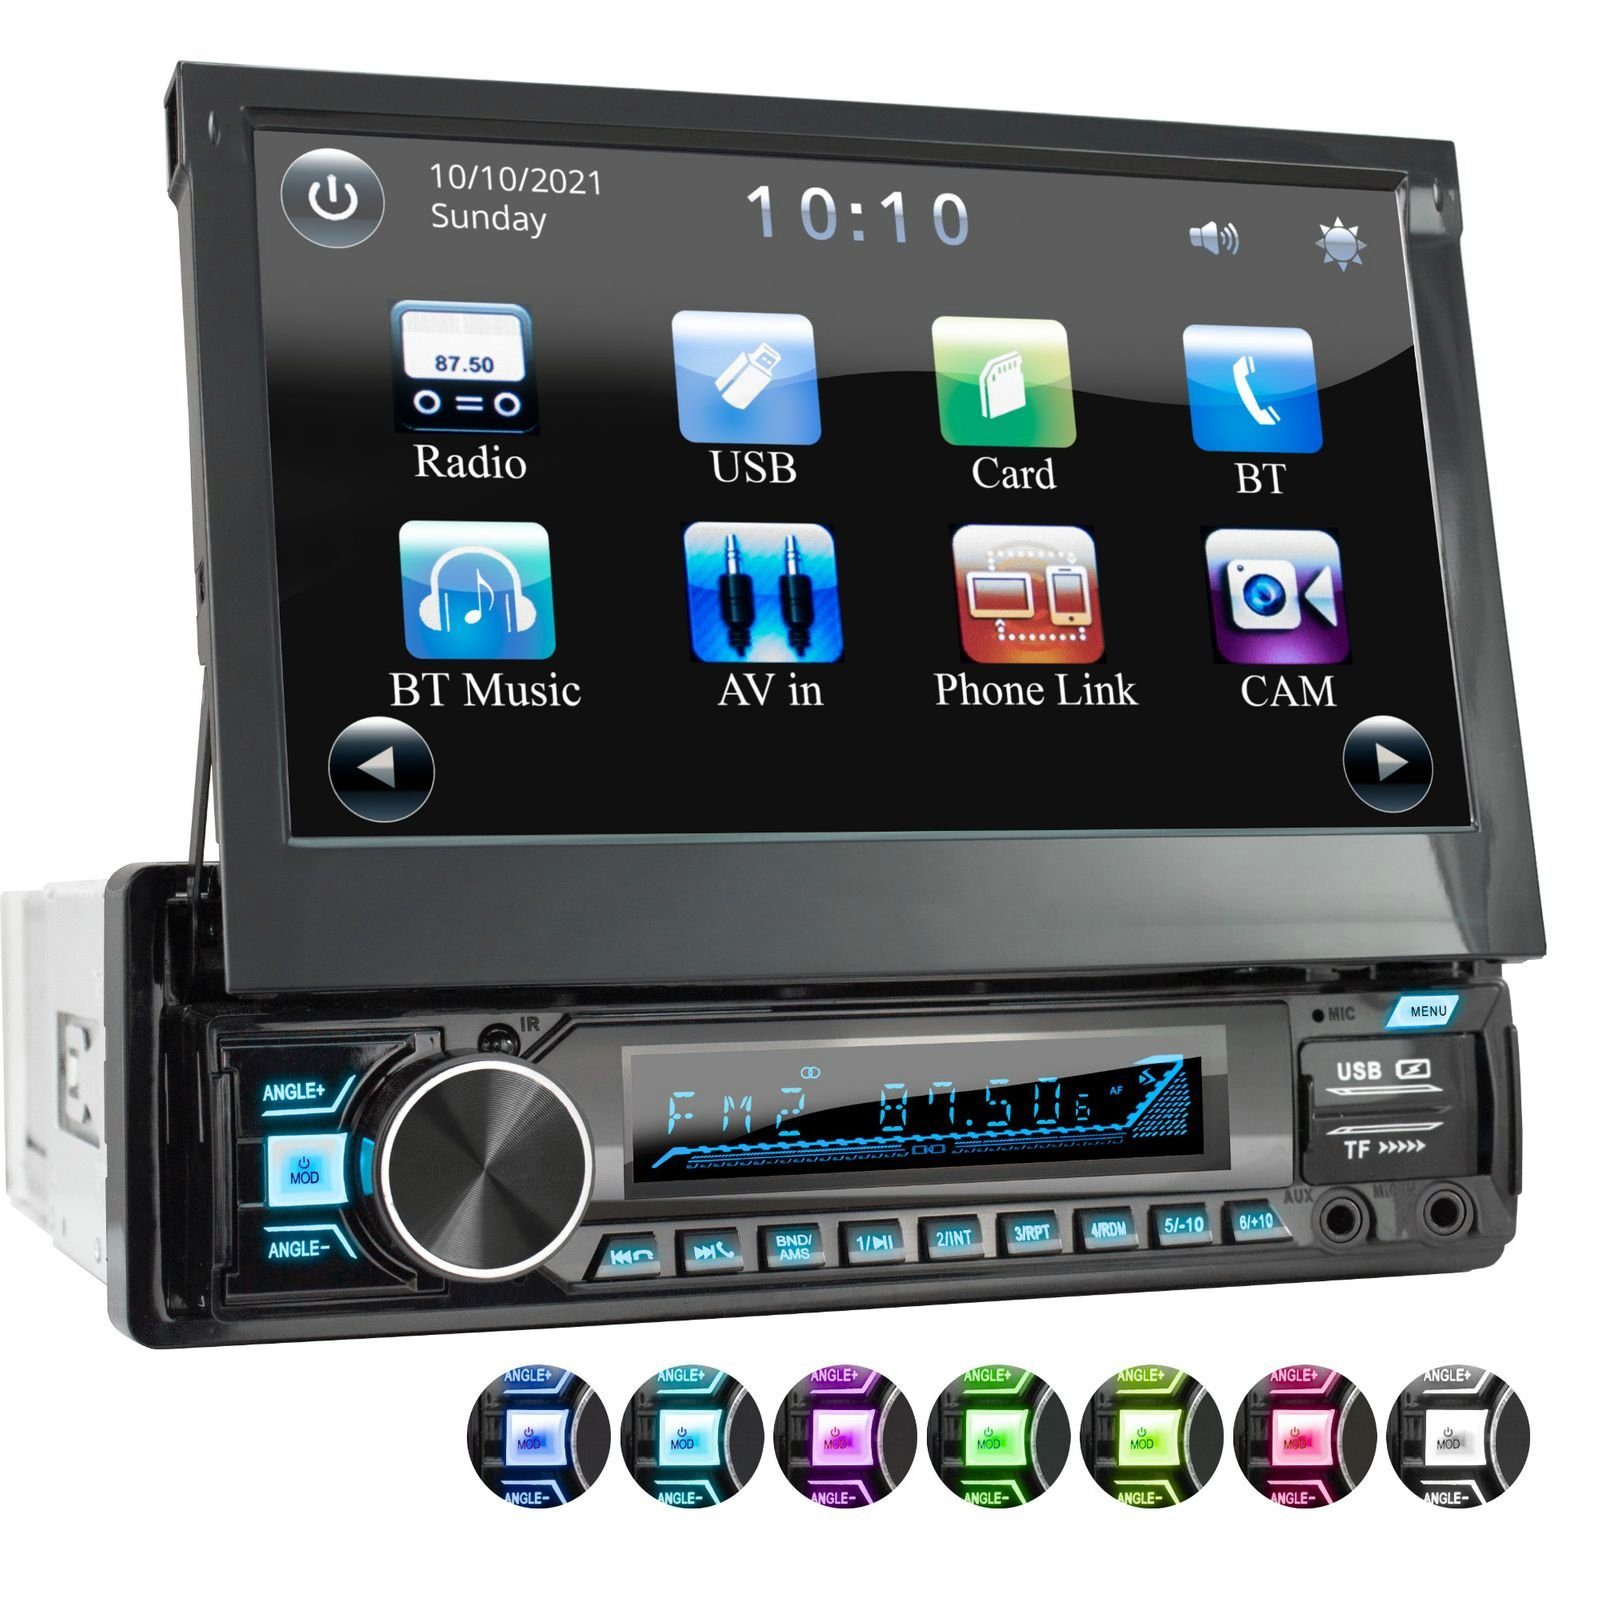 XOMAX XM-V779 Autoradio mit 7 Zoll Touchscreen Bildschirm